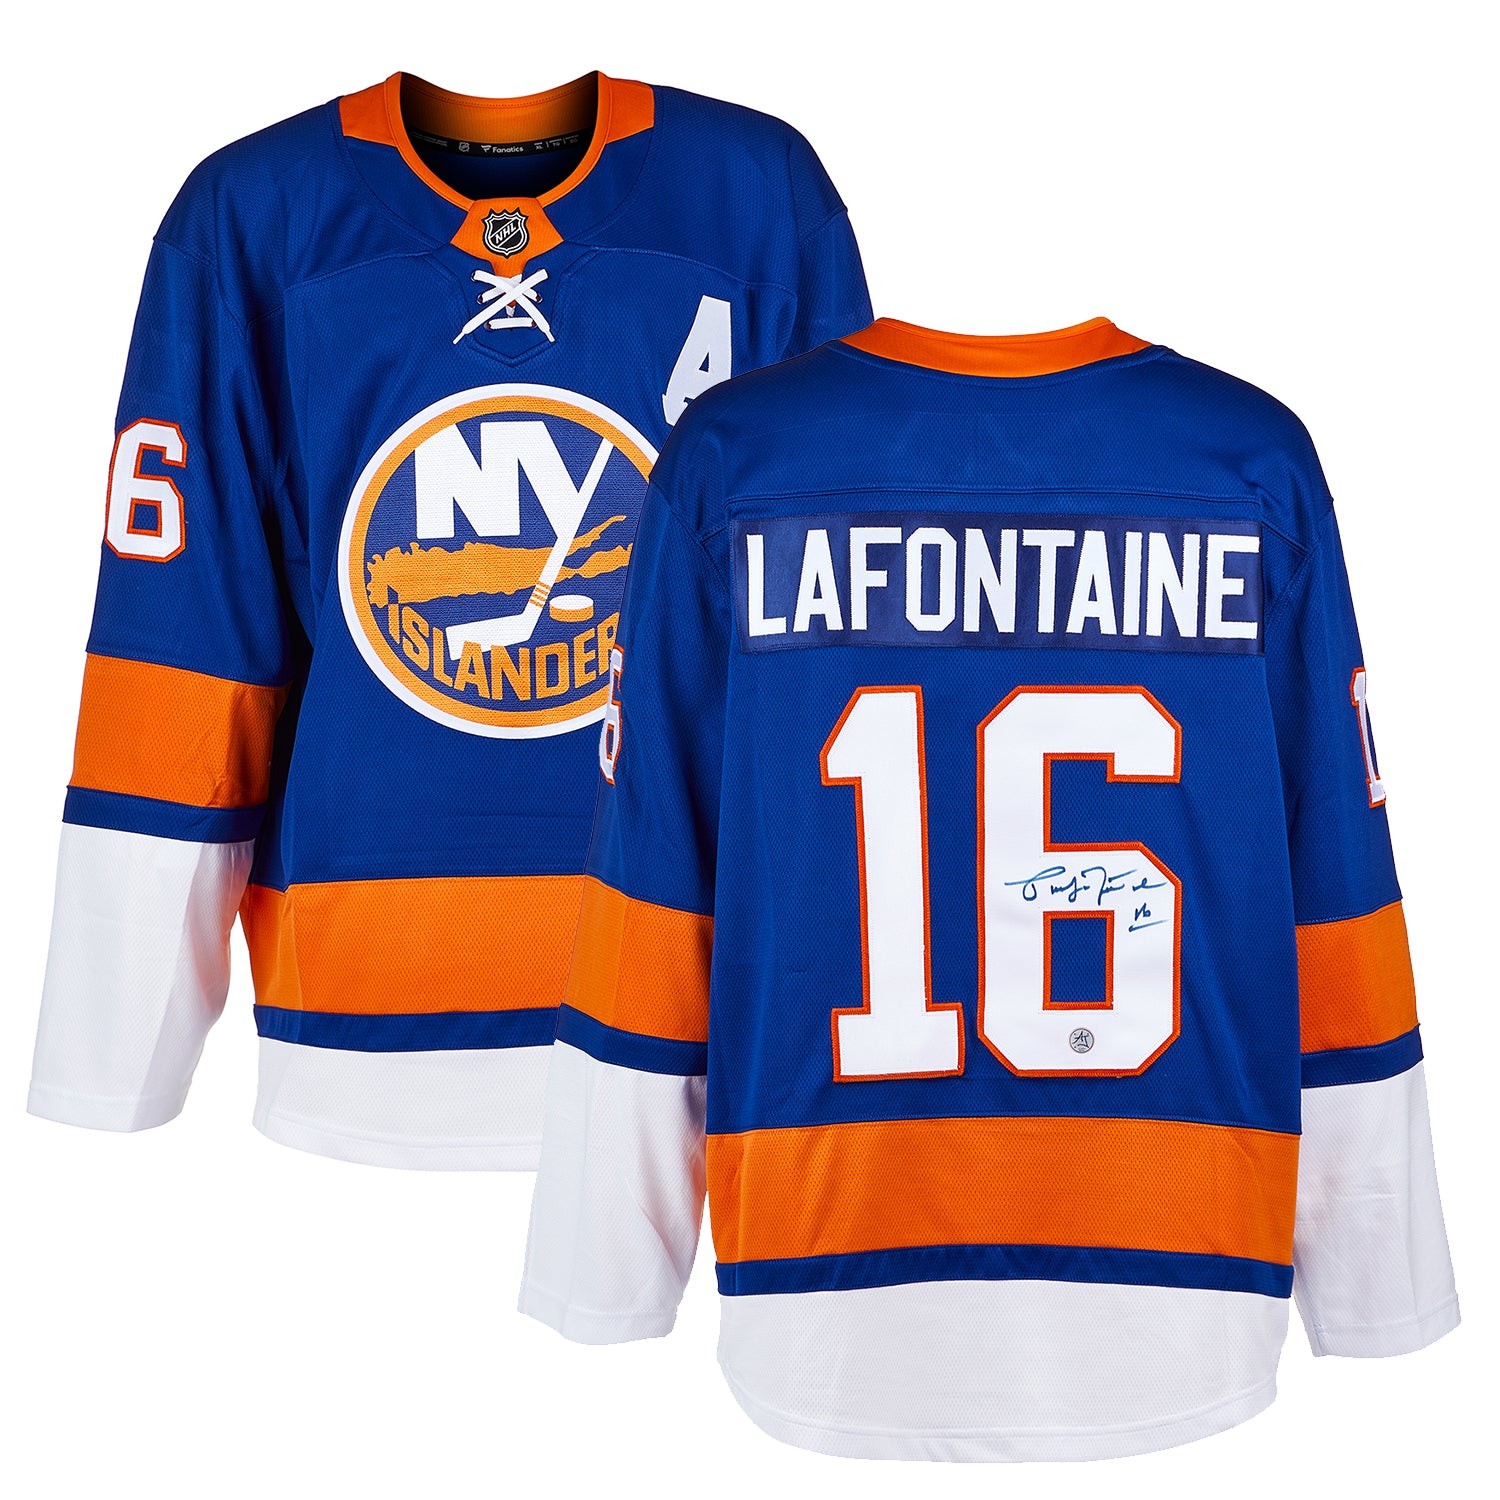 Pat LaFontaine Autographed New York Islanders Fanatics Jersey